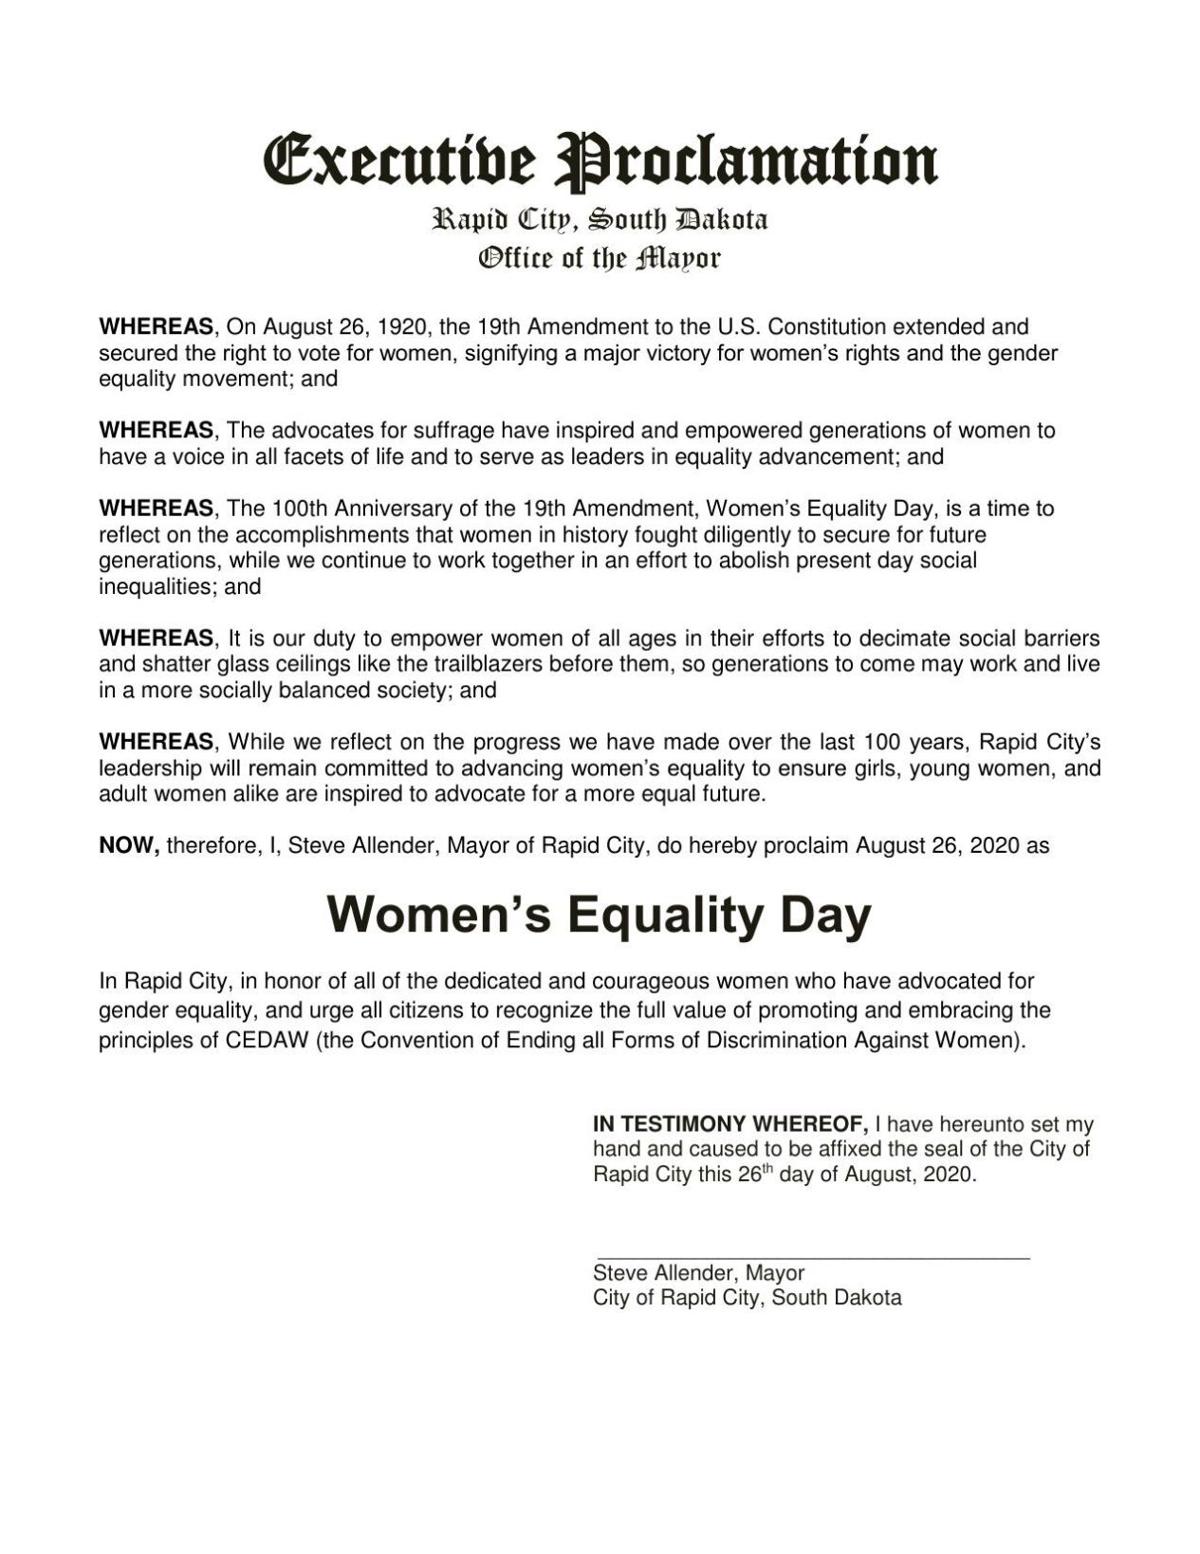 Mayor Steve Allender's Proclamation on Women's Equality